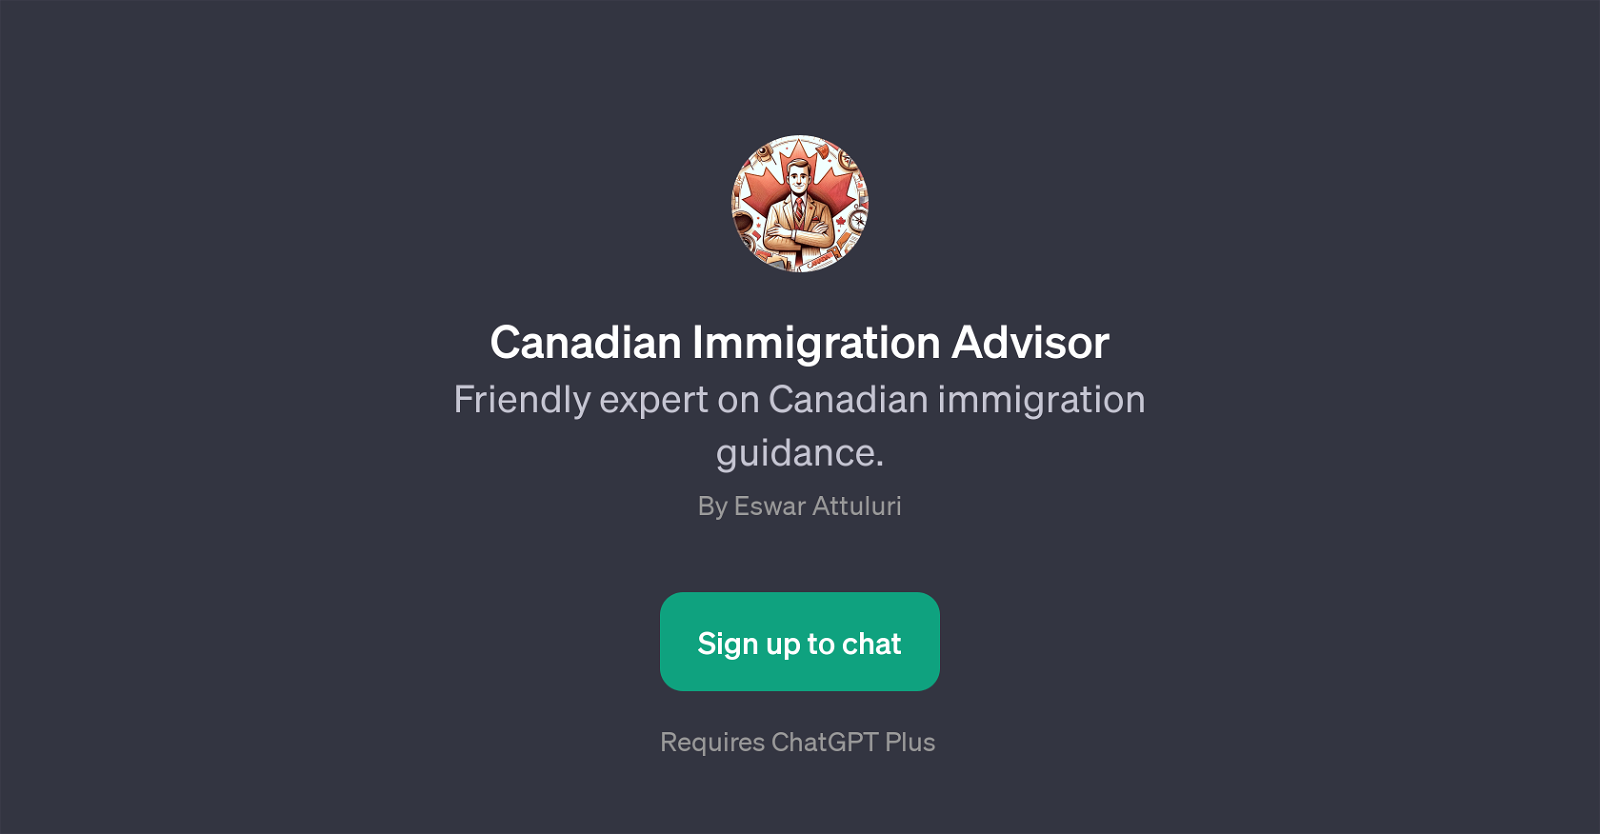 Canadian Immigration Advisor website